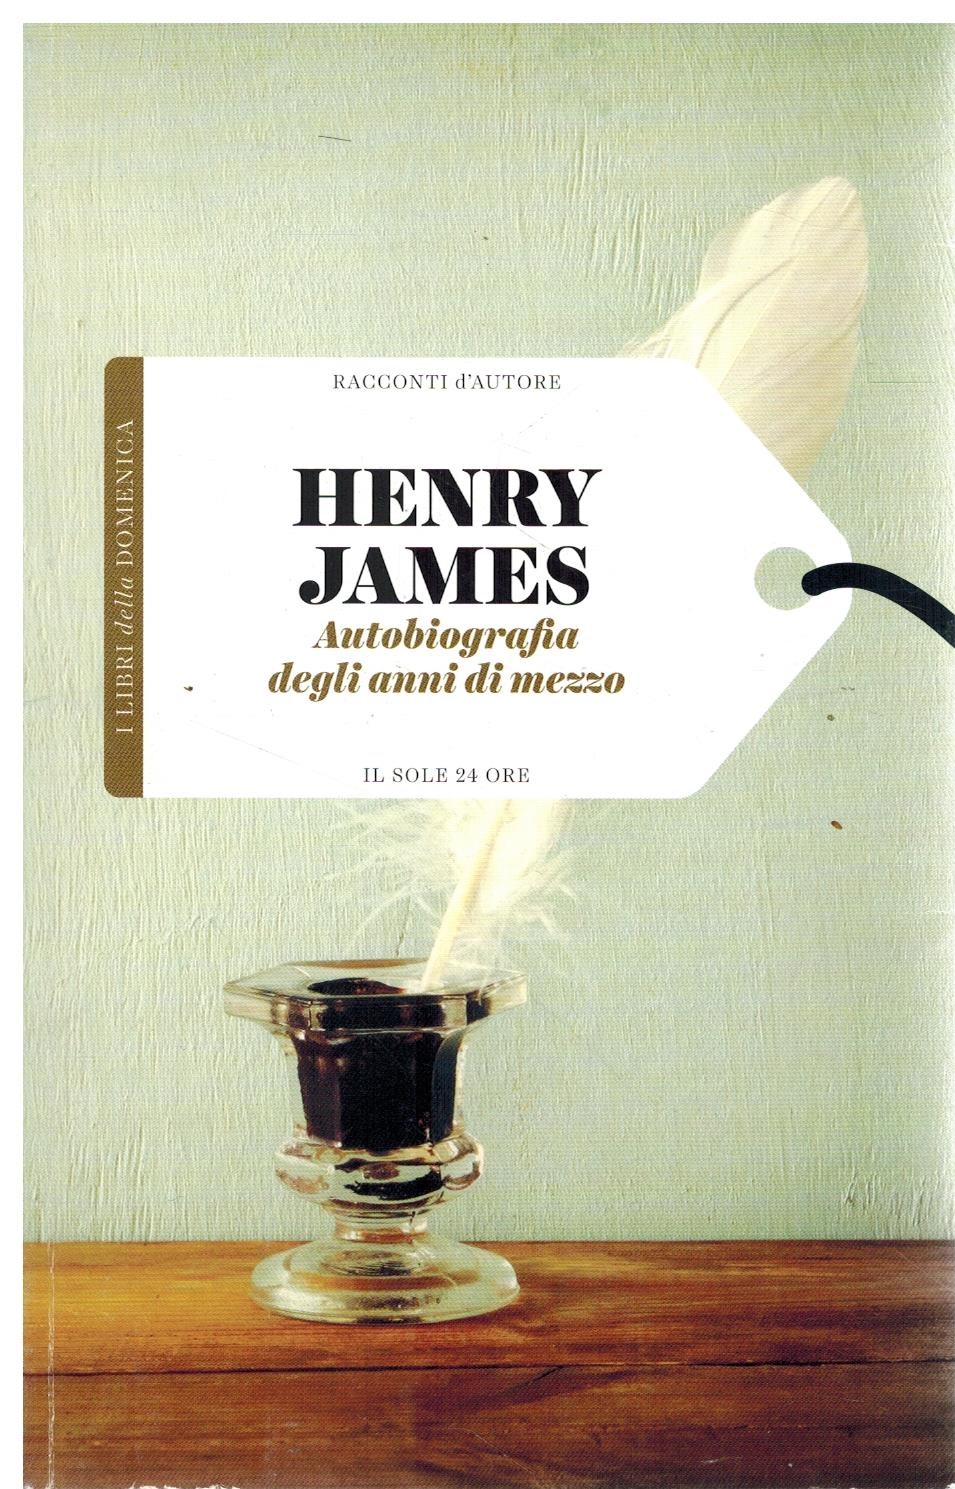 HENRY JAMES